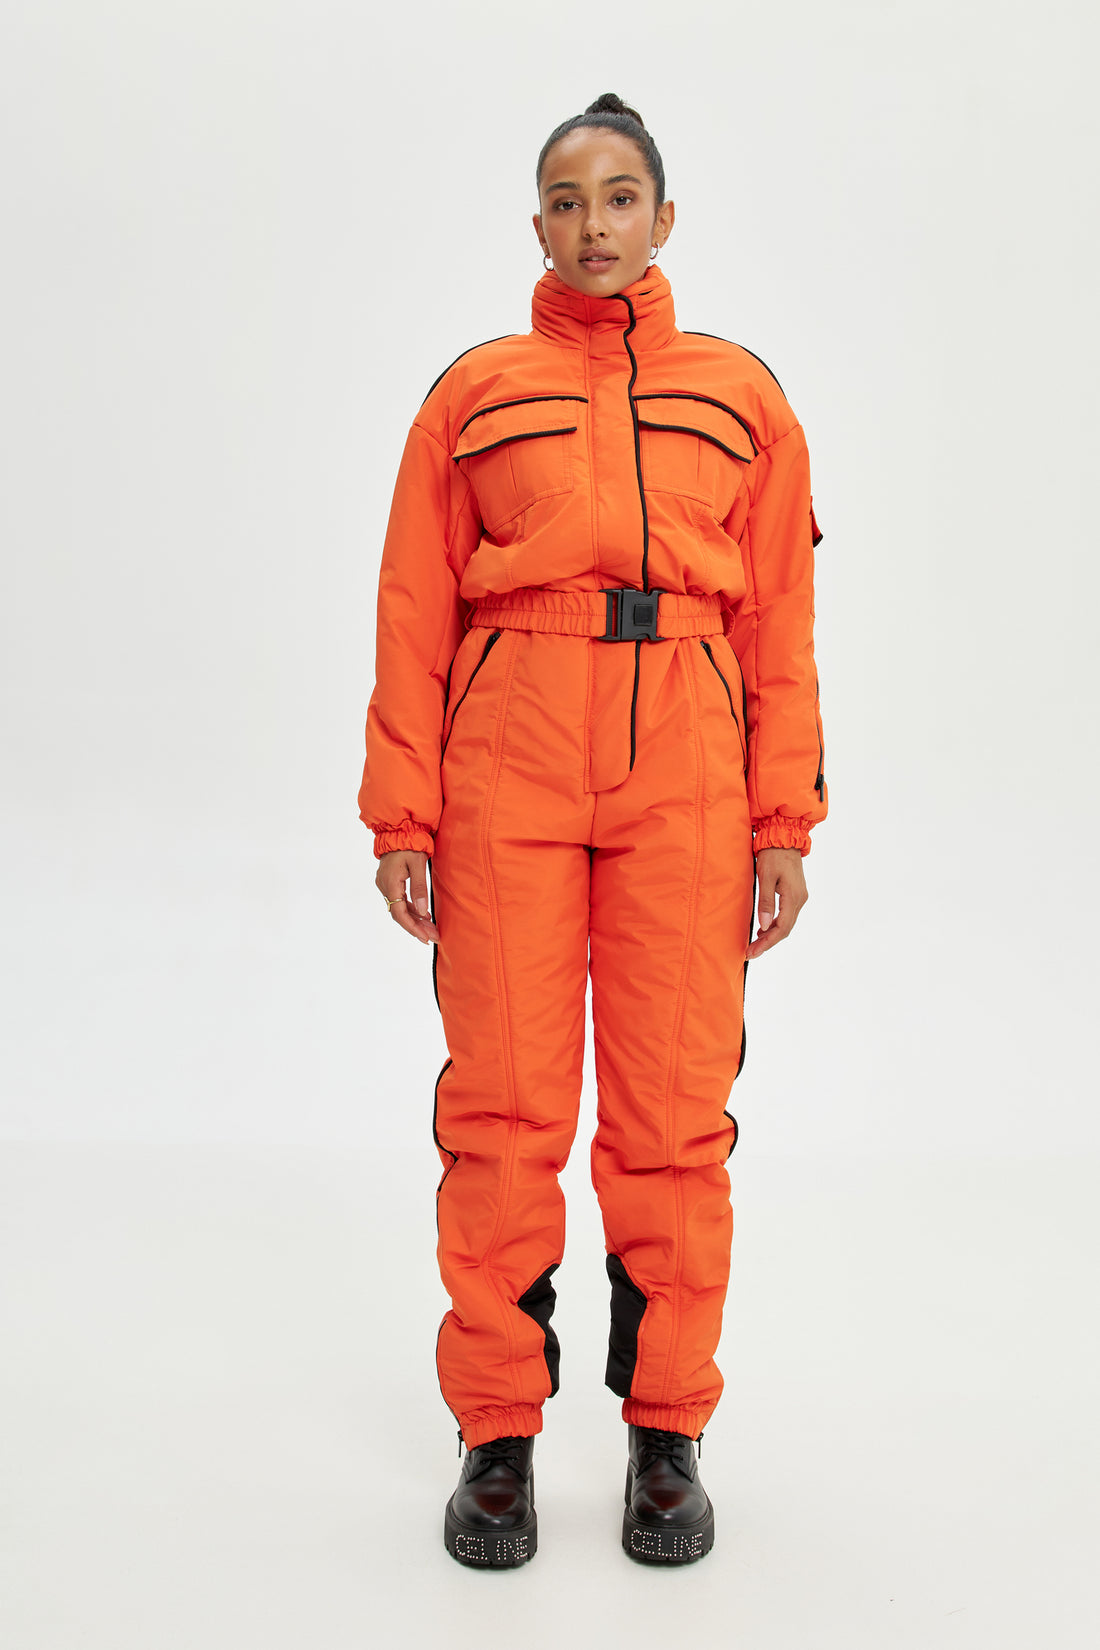 Orange ski suit BLANC - ORANGE with black edging - Waterproof womens ski clothing for ski trip outfit